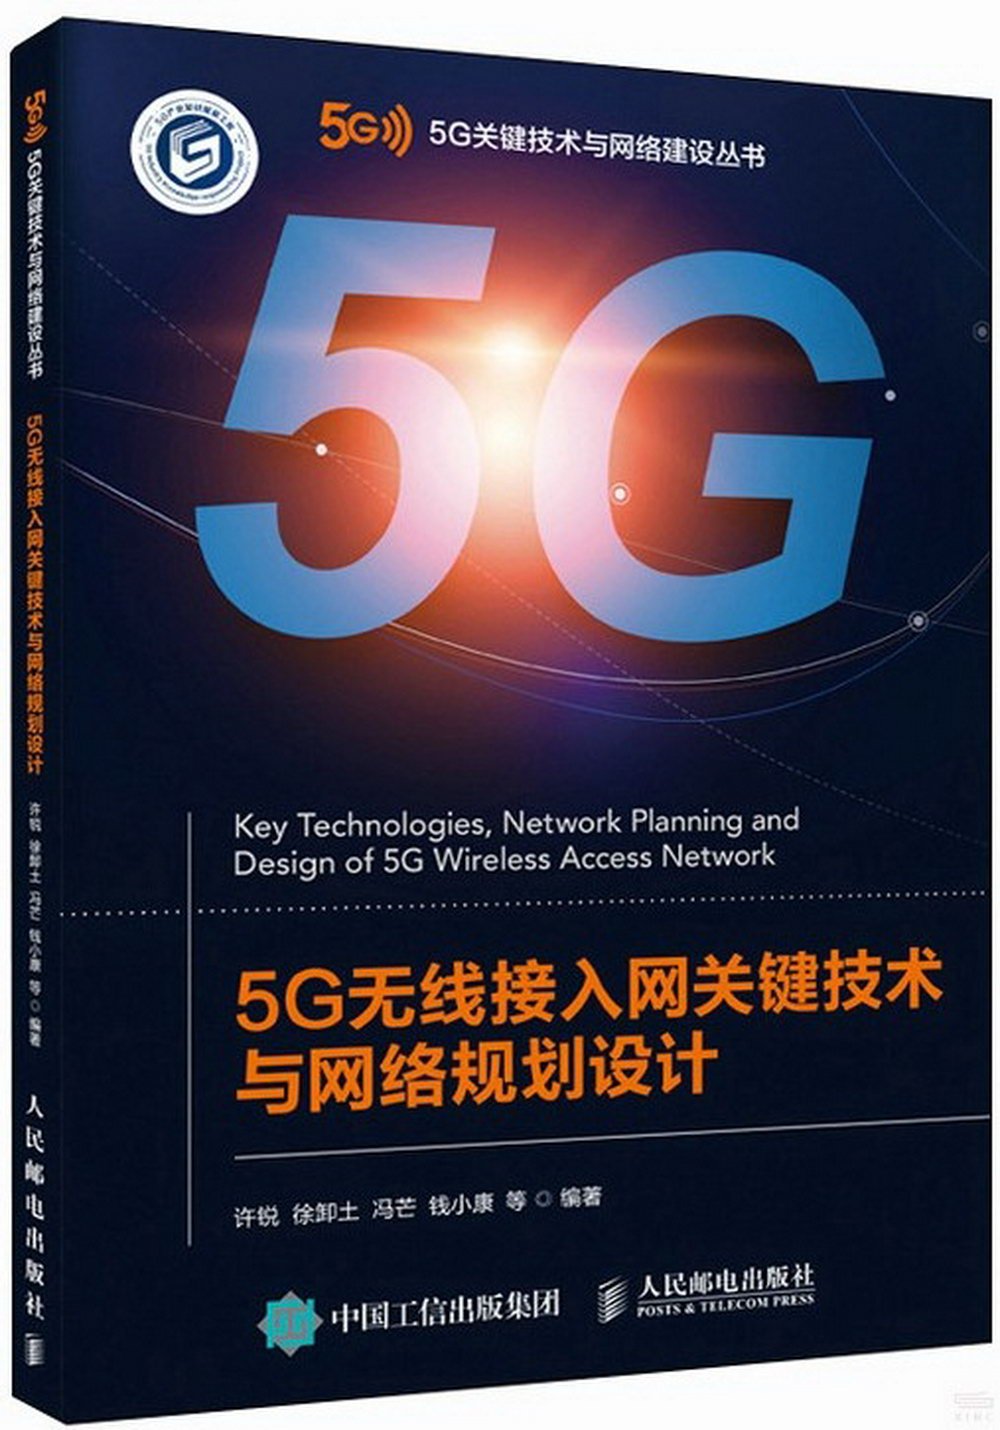 5G無線接入網關鍵技術與網絡規劃設計